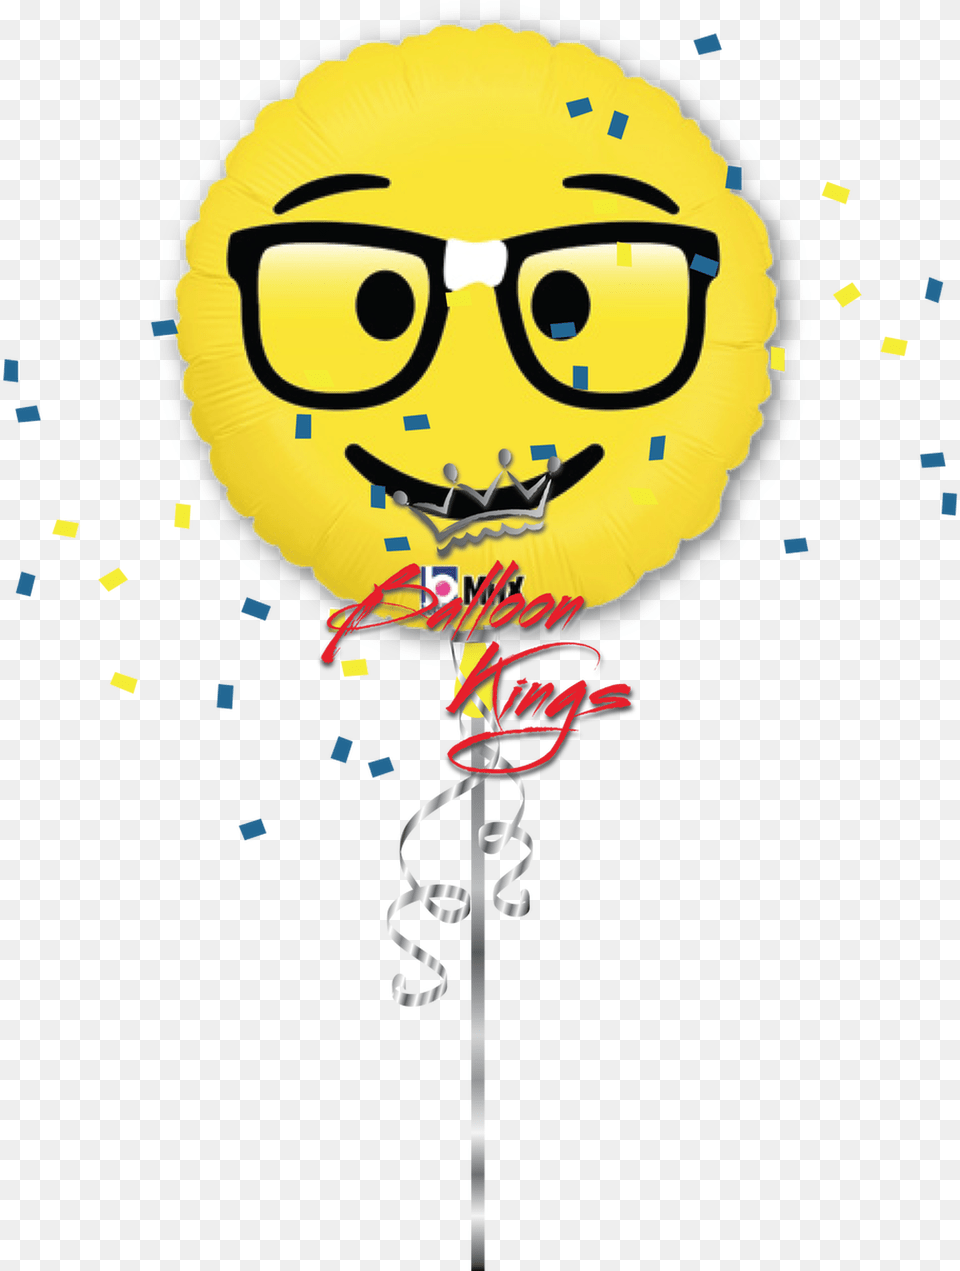 Emoji Nerd Balloon, Food, Sweets, Accessories, Glasses Png